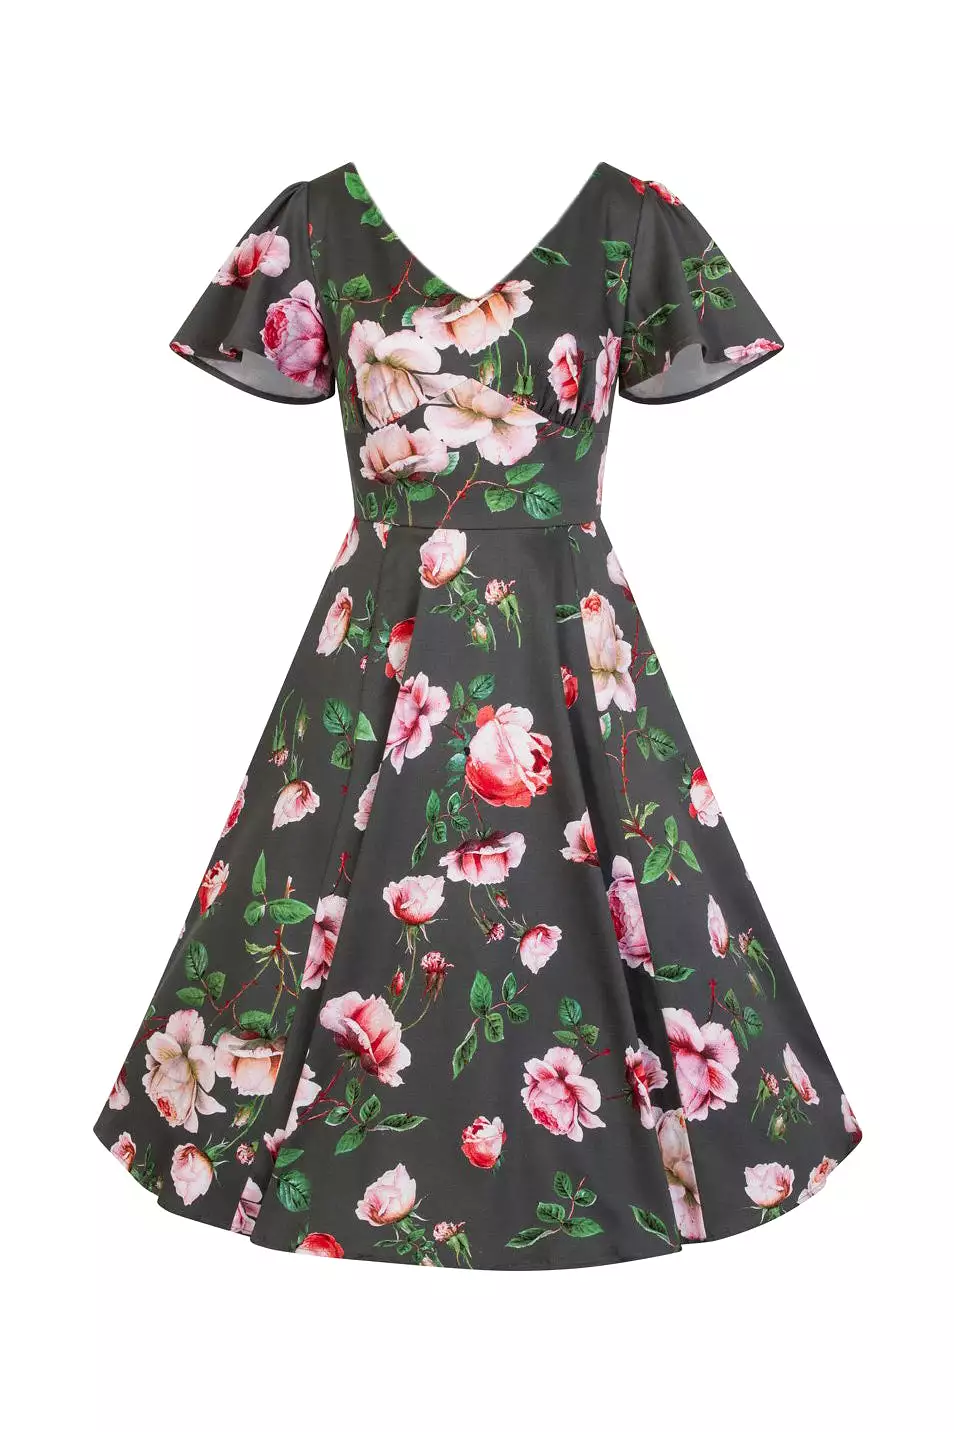 Sage Green Floral Print Cap Sleeve Rockabilly 50s Swing Tea Dress